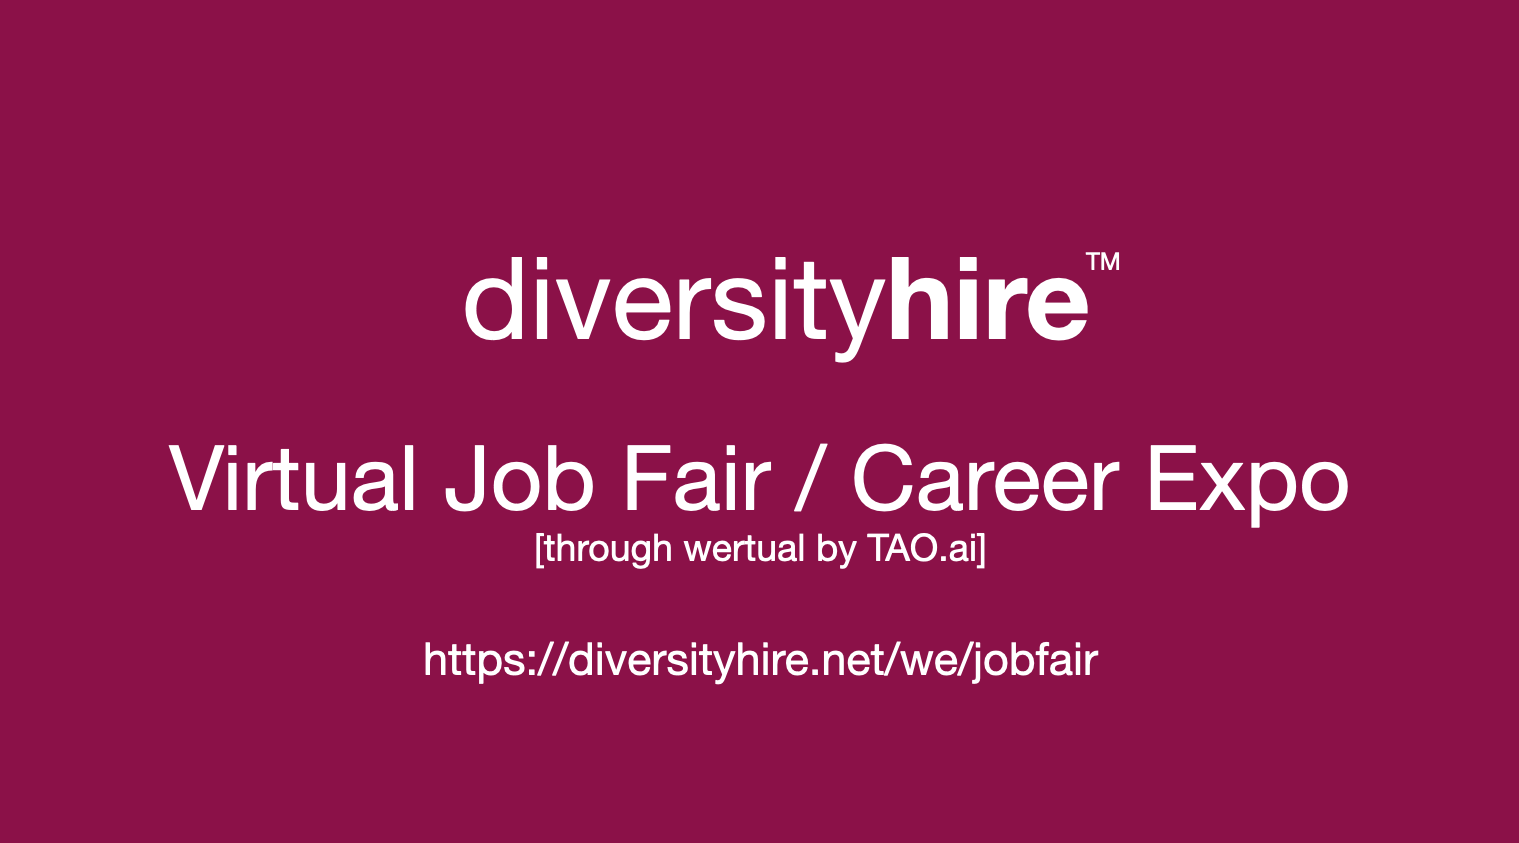 #DiversityHire Virtual Job Fair / Career Expo #Diversity Eve #San Francisco